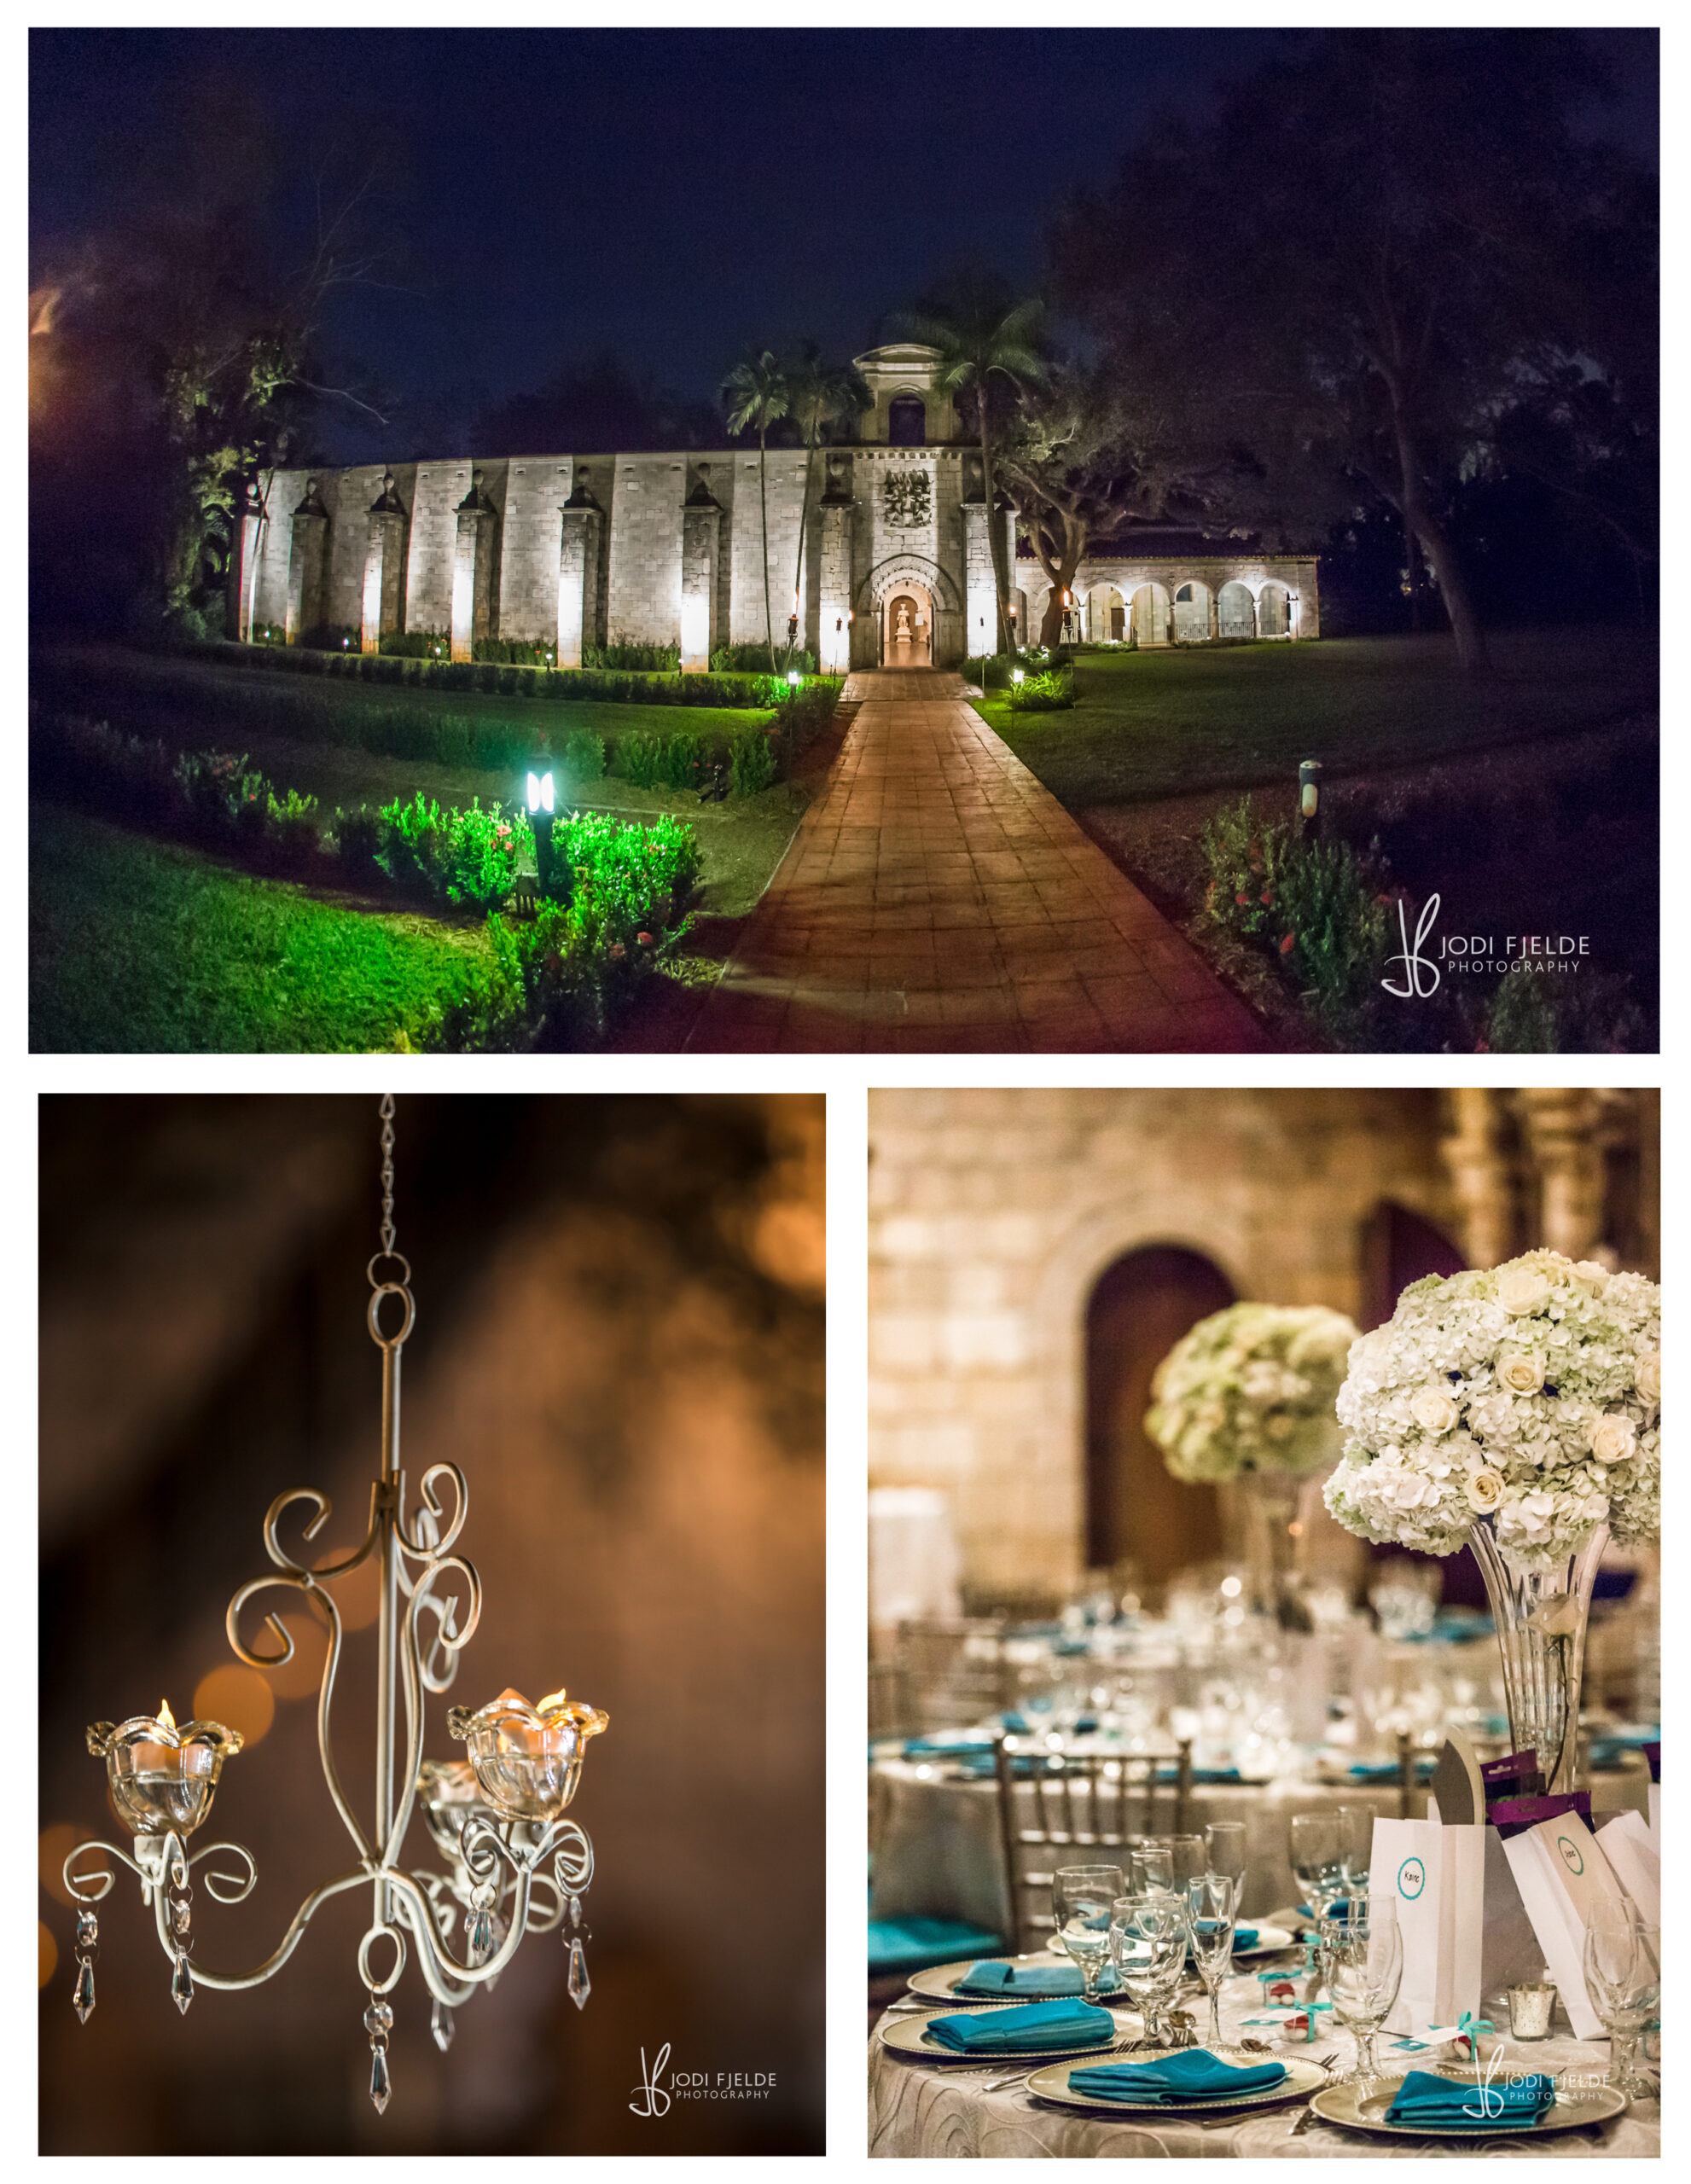 Ancient_Spanish_Monastery_Miami_Florida_wedding_Gio_Iggy_Jodi_Fjelde_Photography_14.jpg